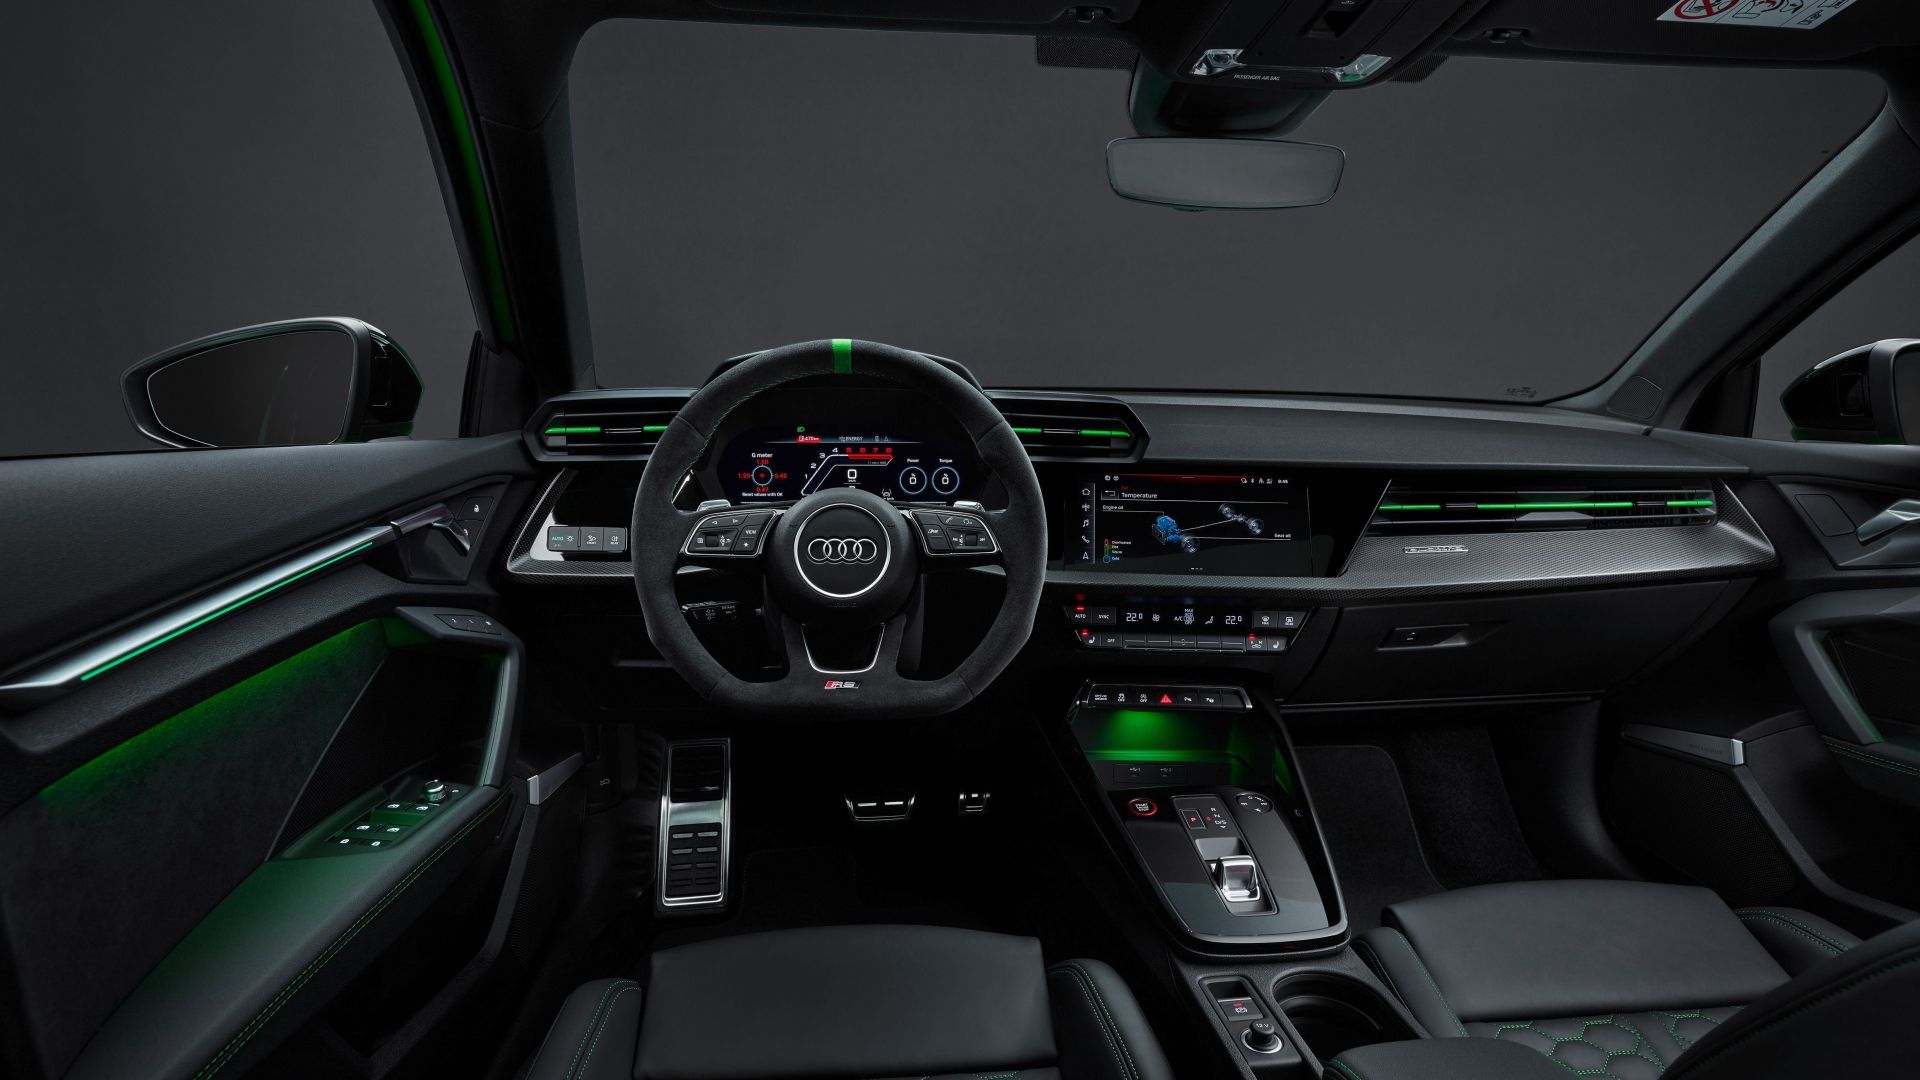 Audi RS3 dashboard